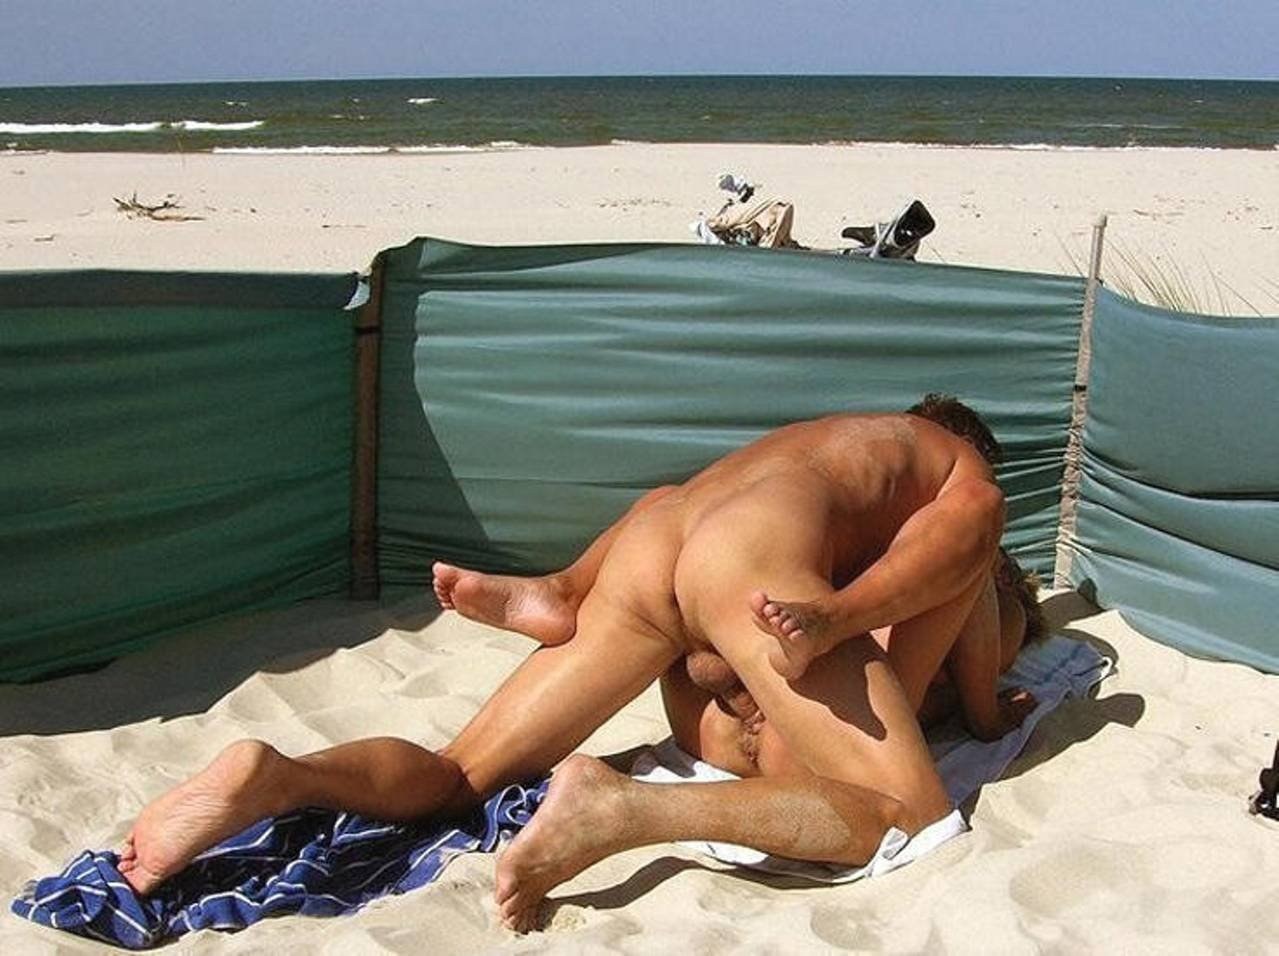 https://pichunter.club/uploads/posts/2022-12/1671045631_75-pichunter-club-p-porn-erection-on-a-nudist-beach-79.jpg